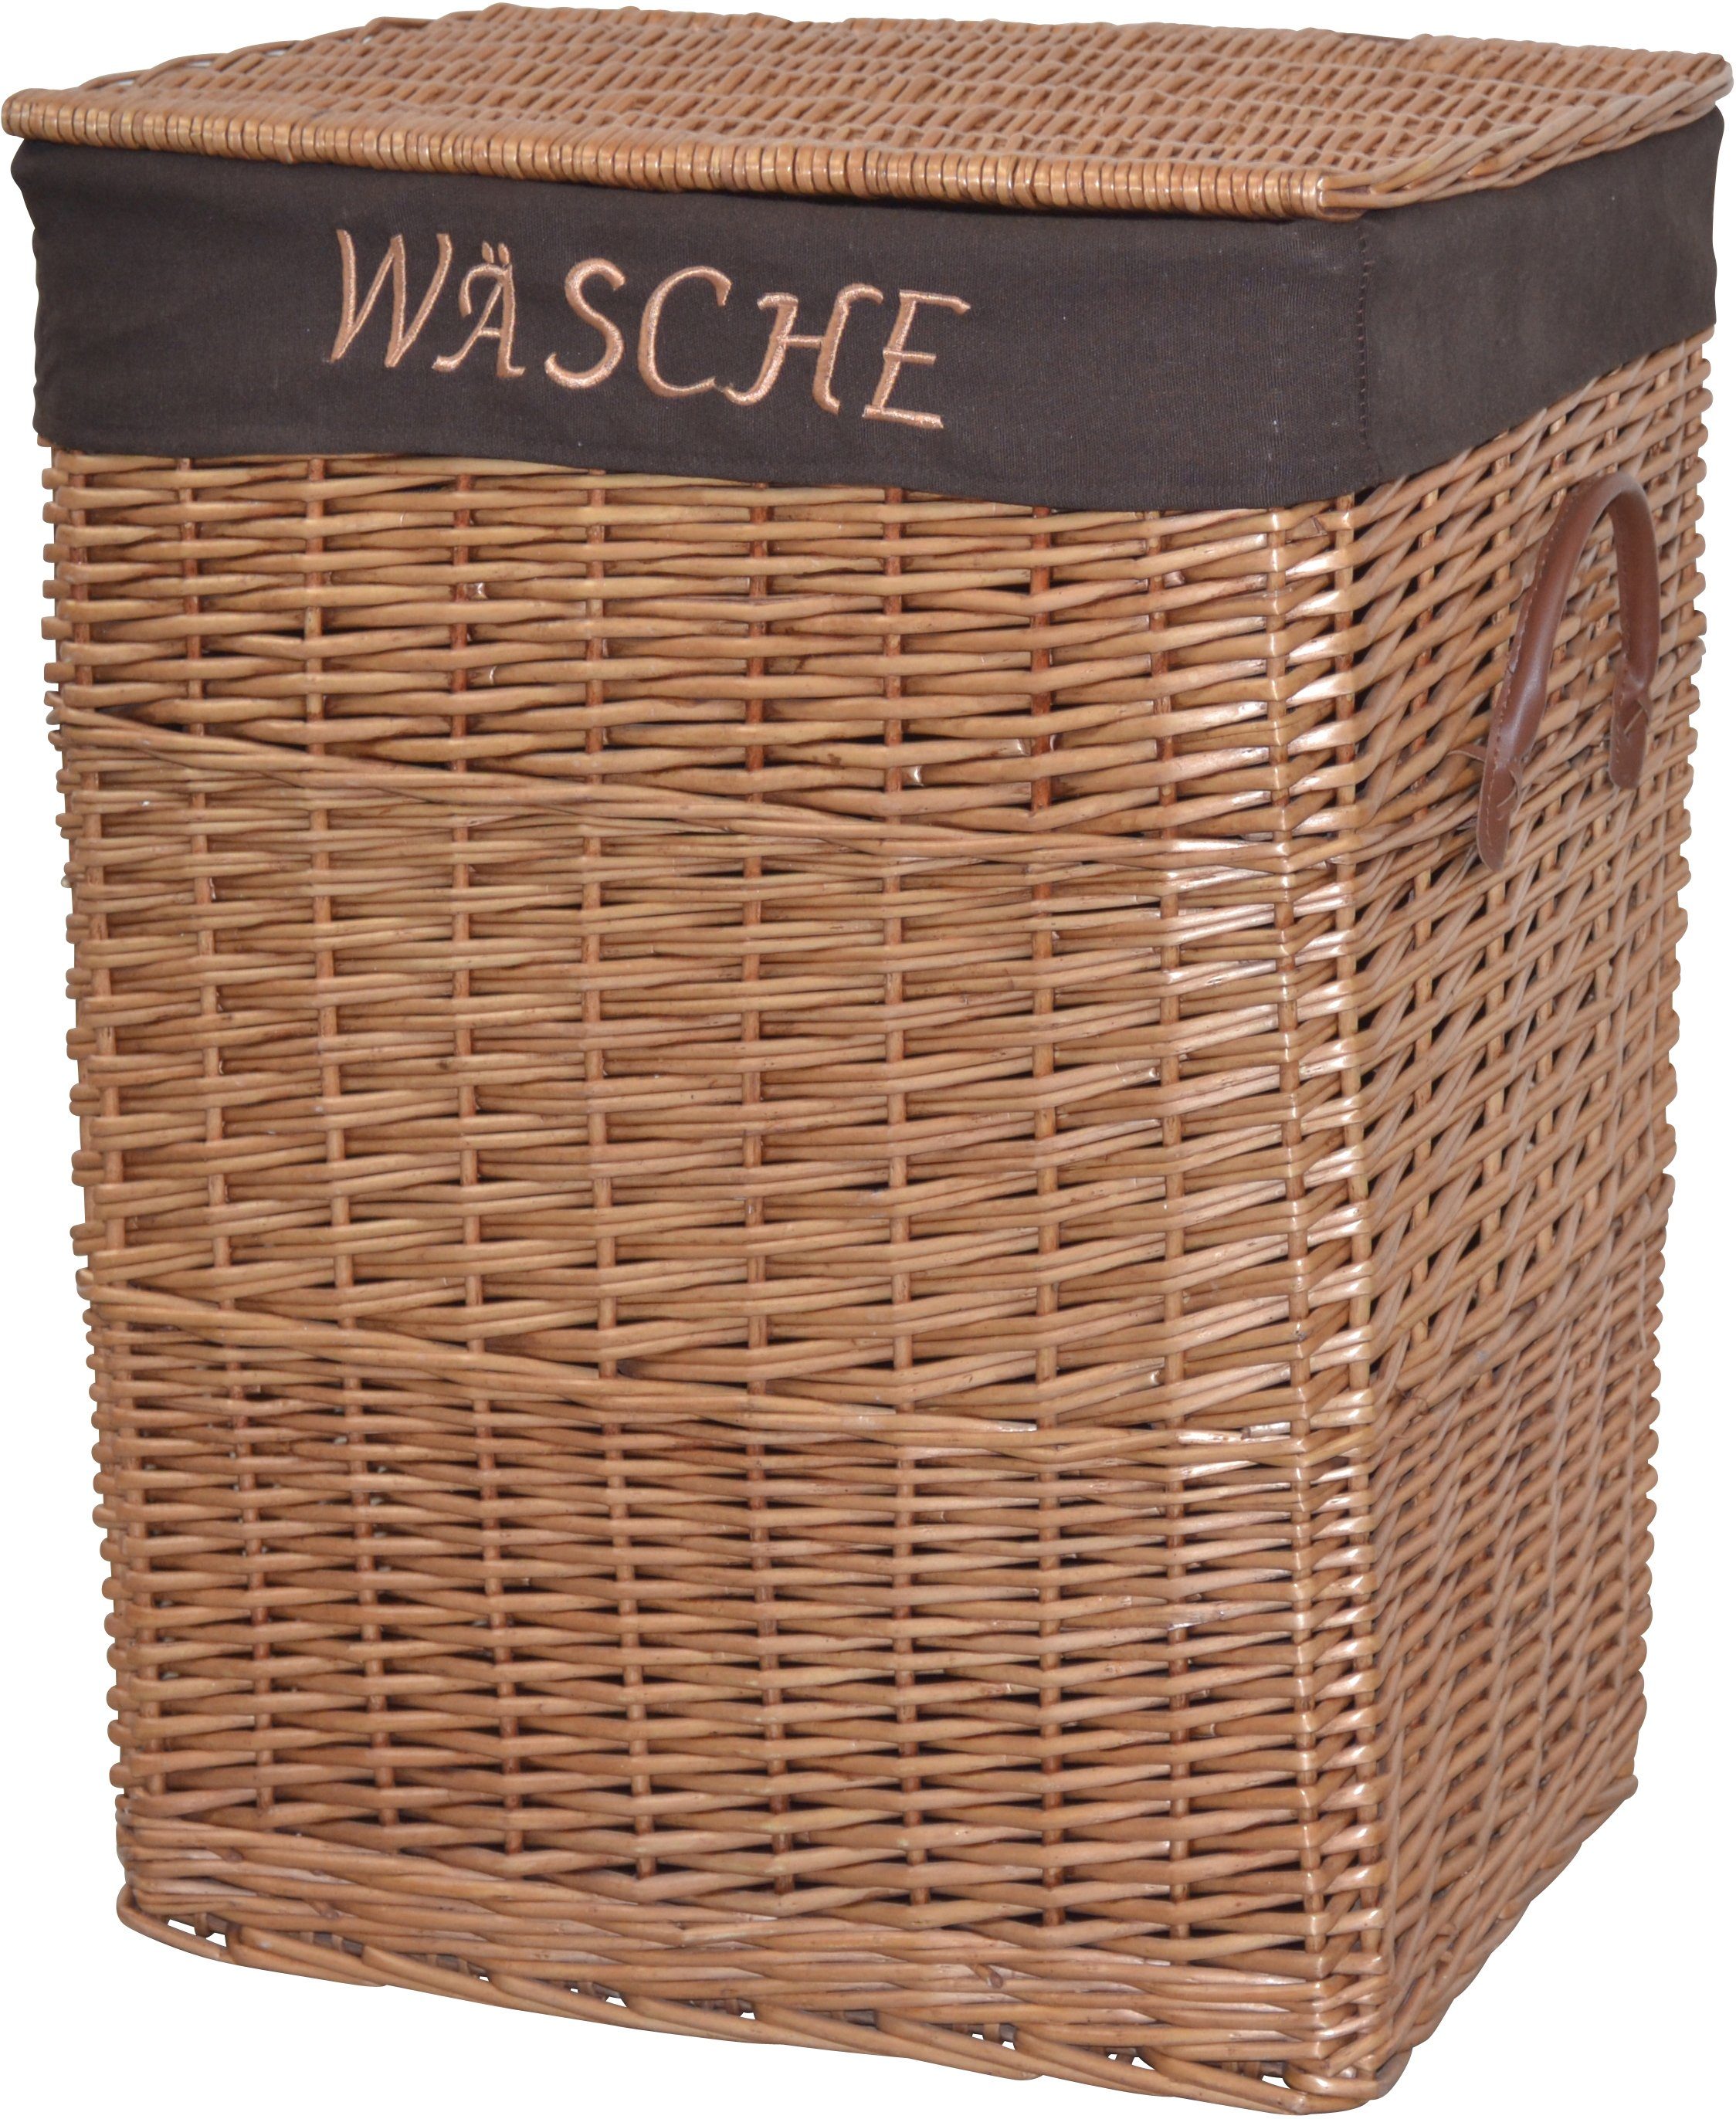 HOFMANN LIVING AND MORE Wäschekorb, aus Weide, handgefertigt mit herausnehmbarem Stoffeinsatz, 47x35x61cm braun